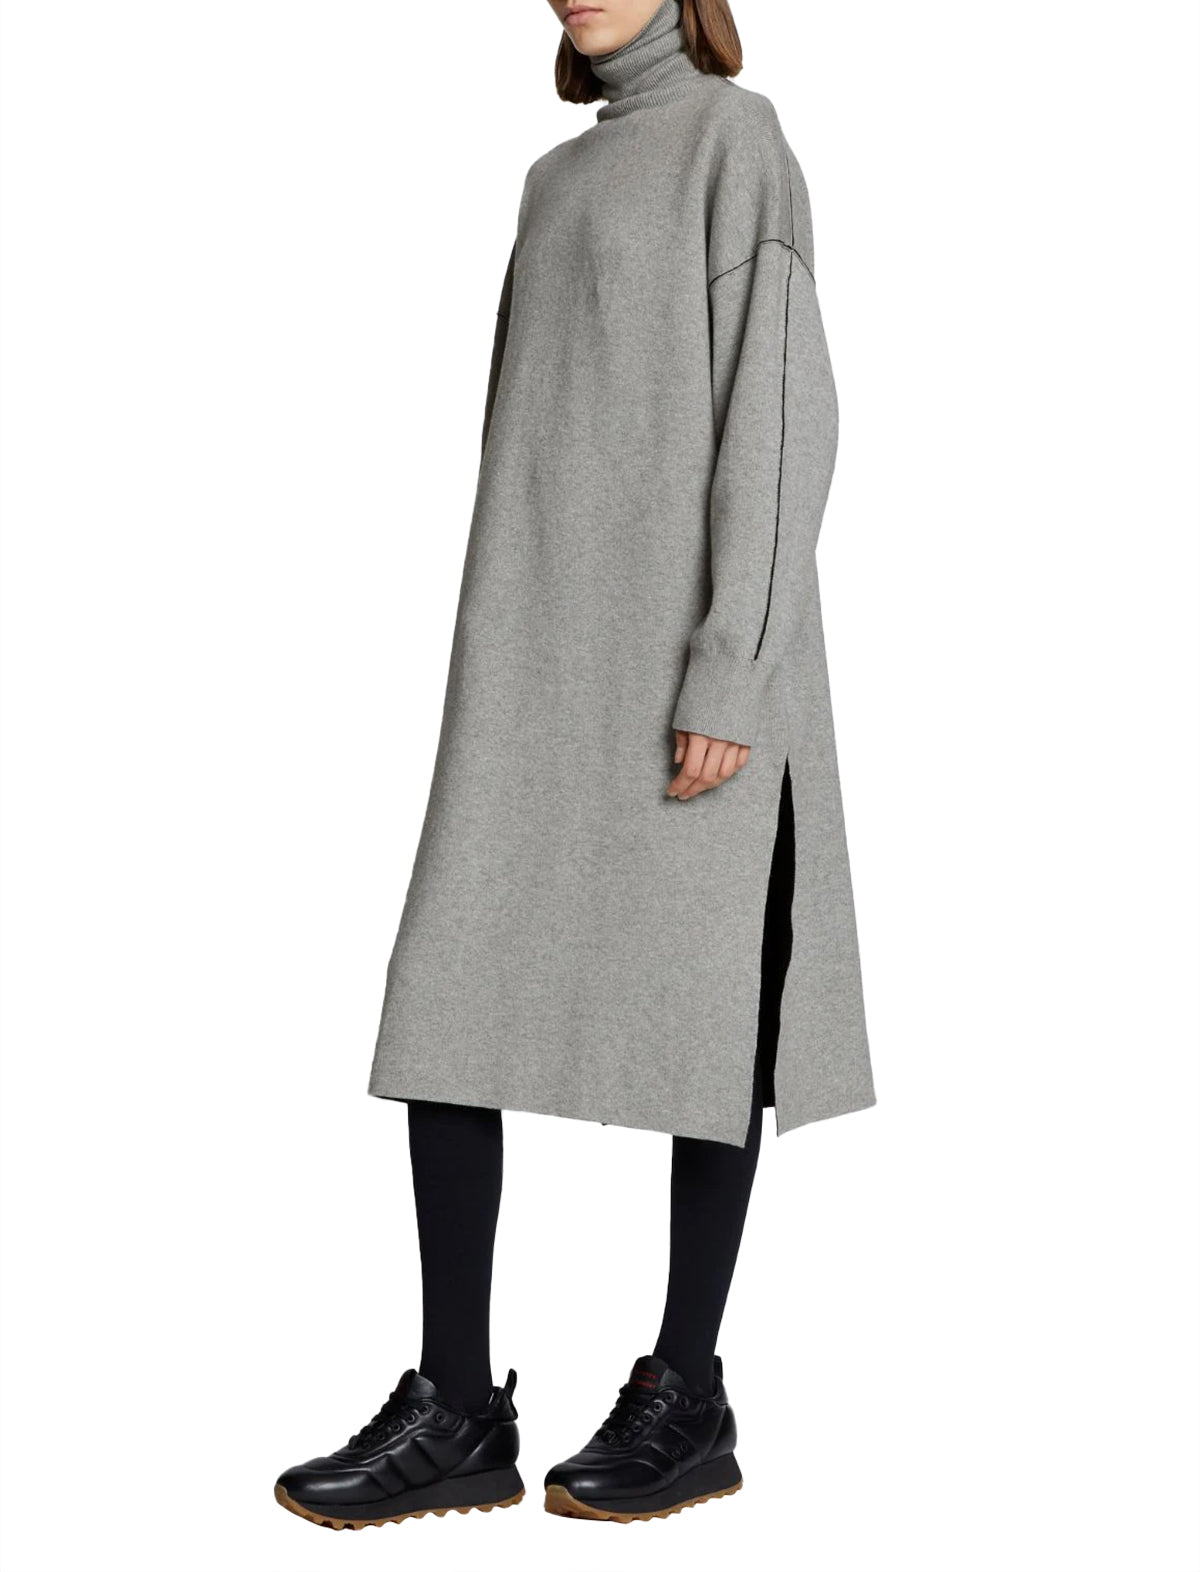 Proenza Schouler White Label Cashmere Blend Turtleneck Dress in Grey